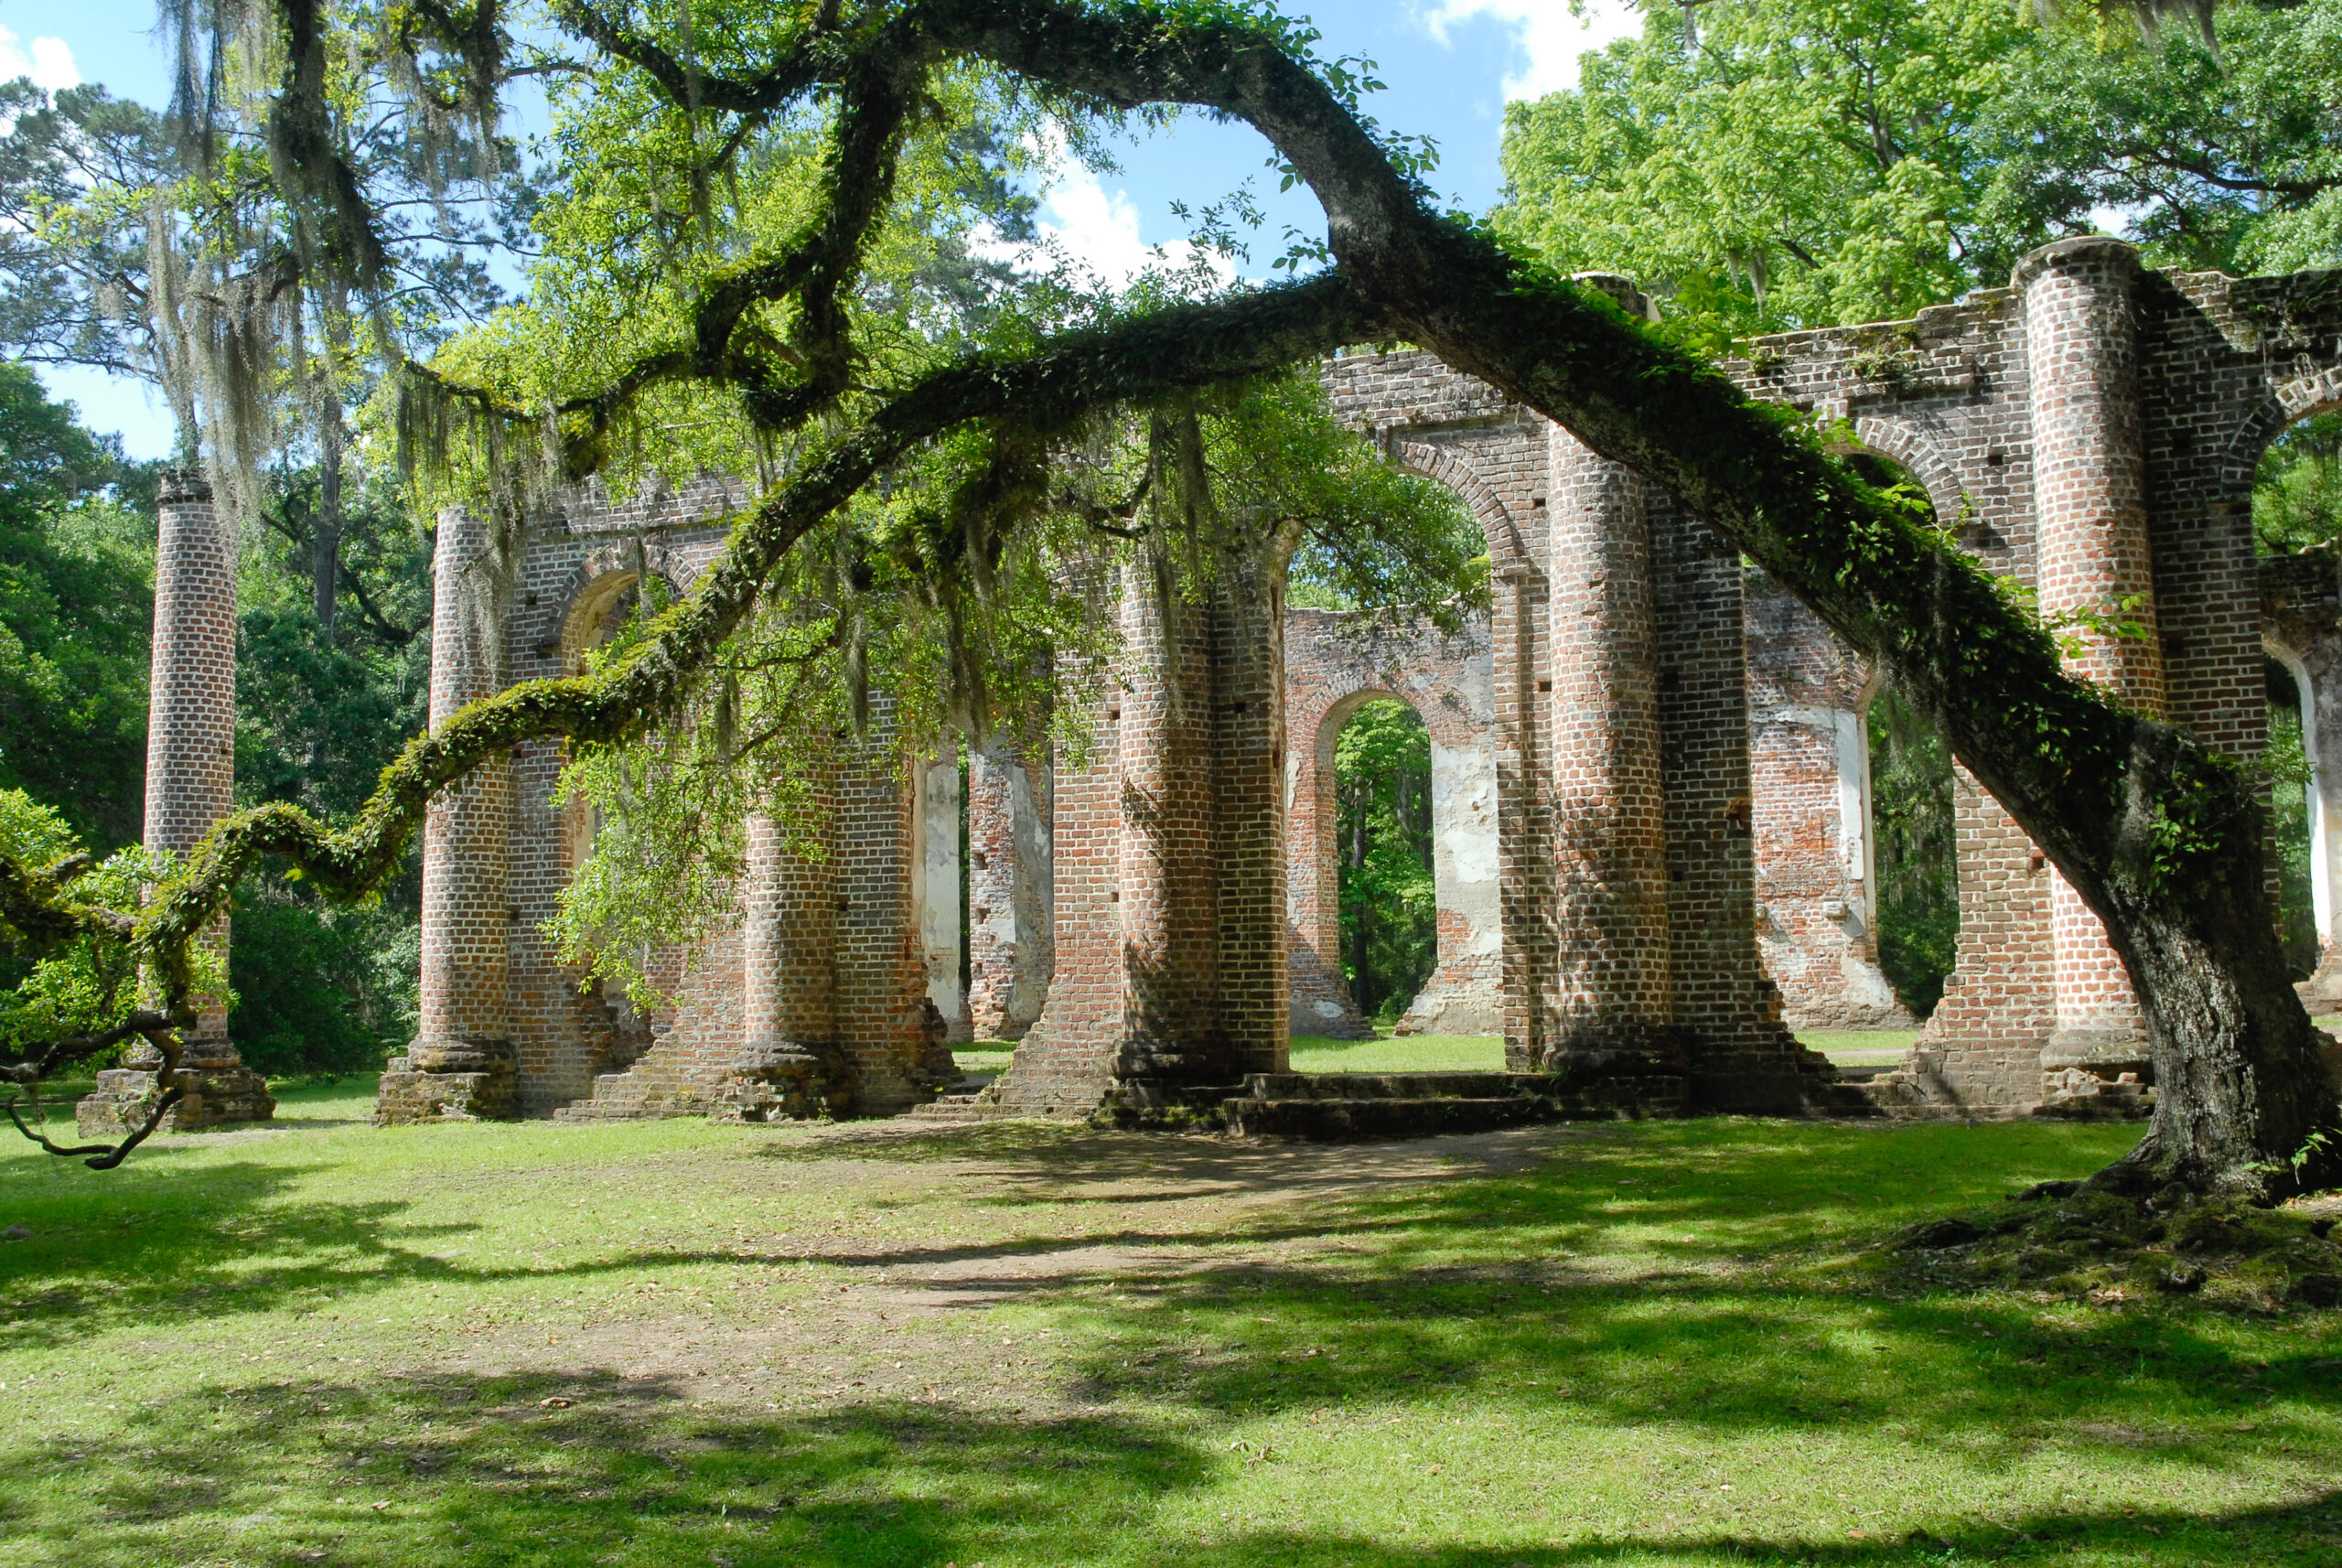 Ruins of Old Sheldon Church near Beaufort, South Carolina, United States.